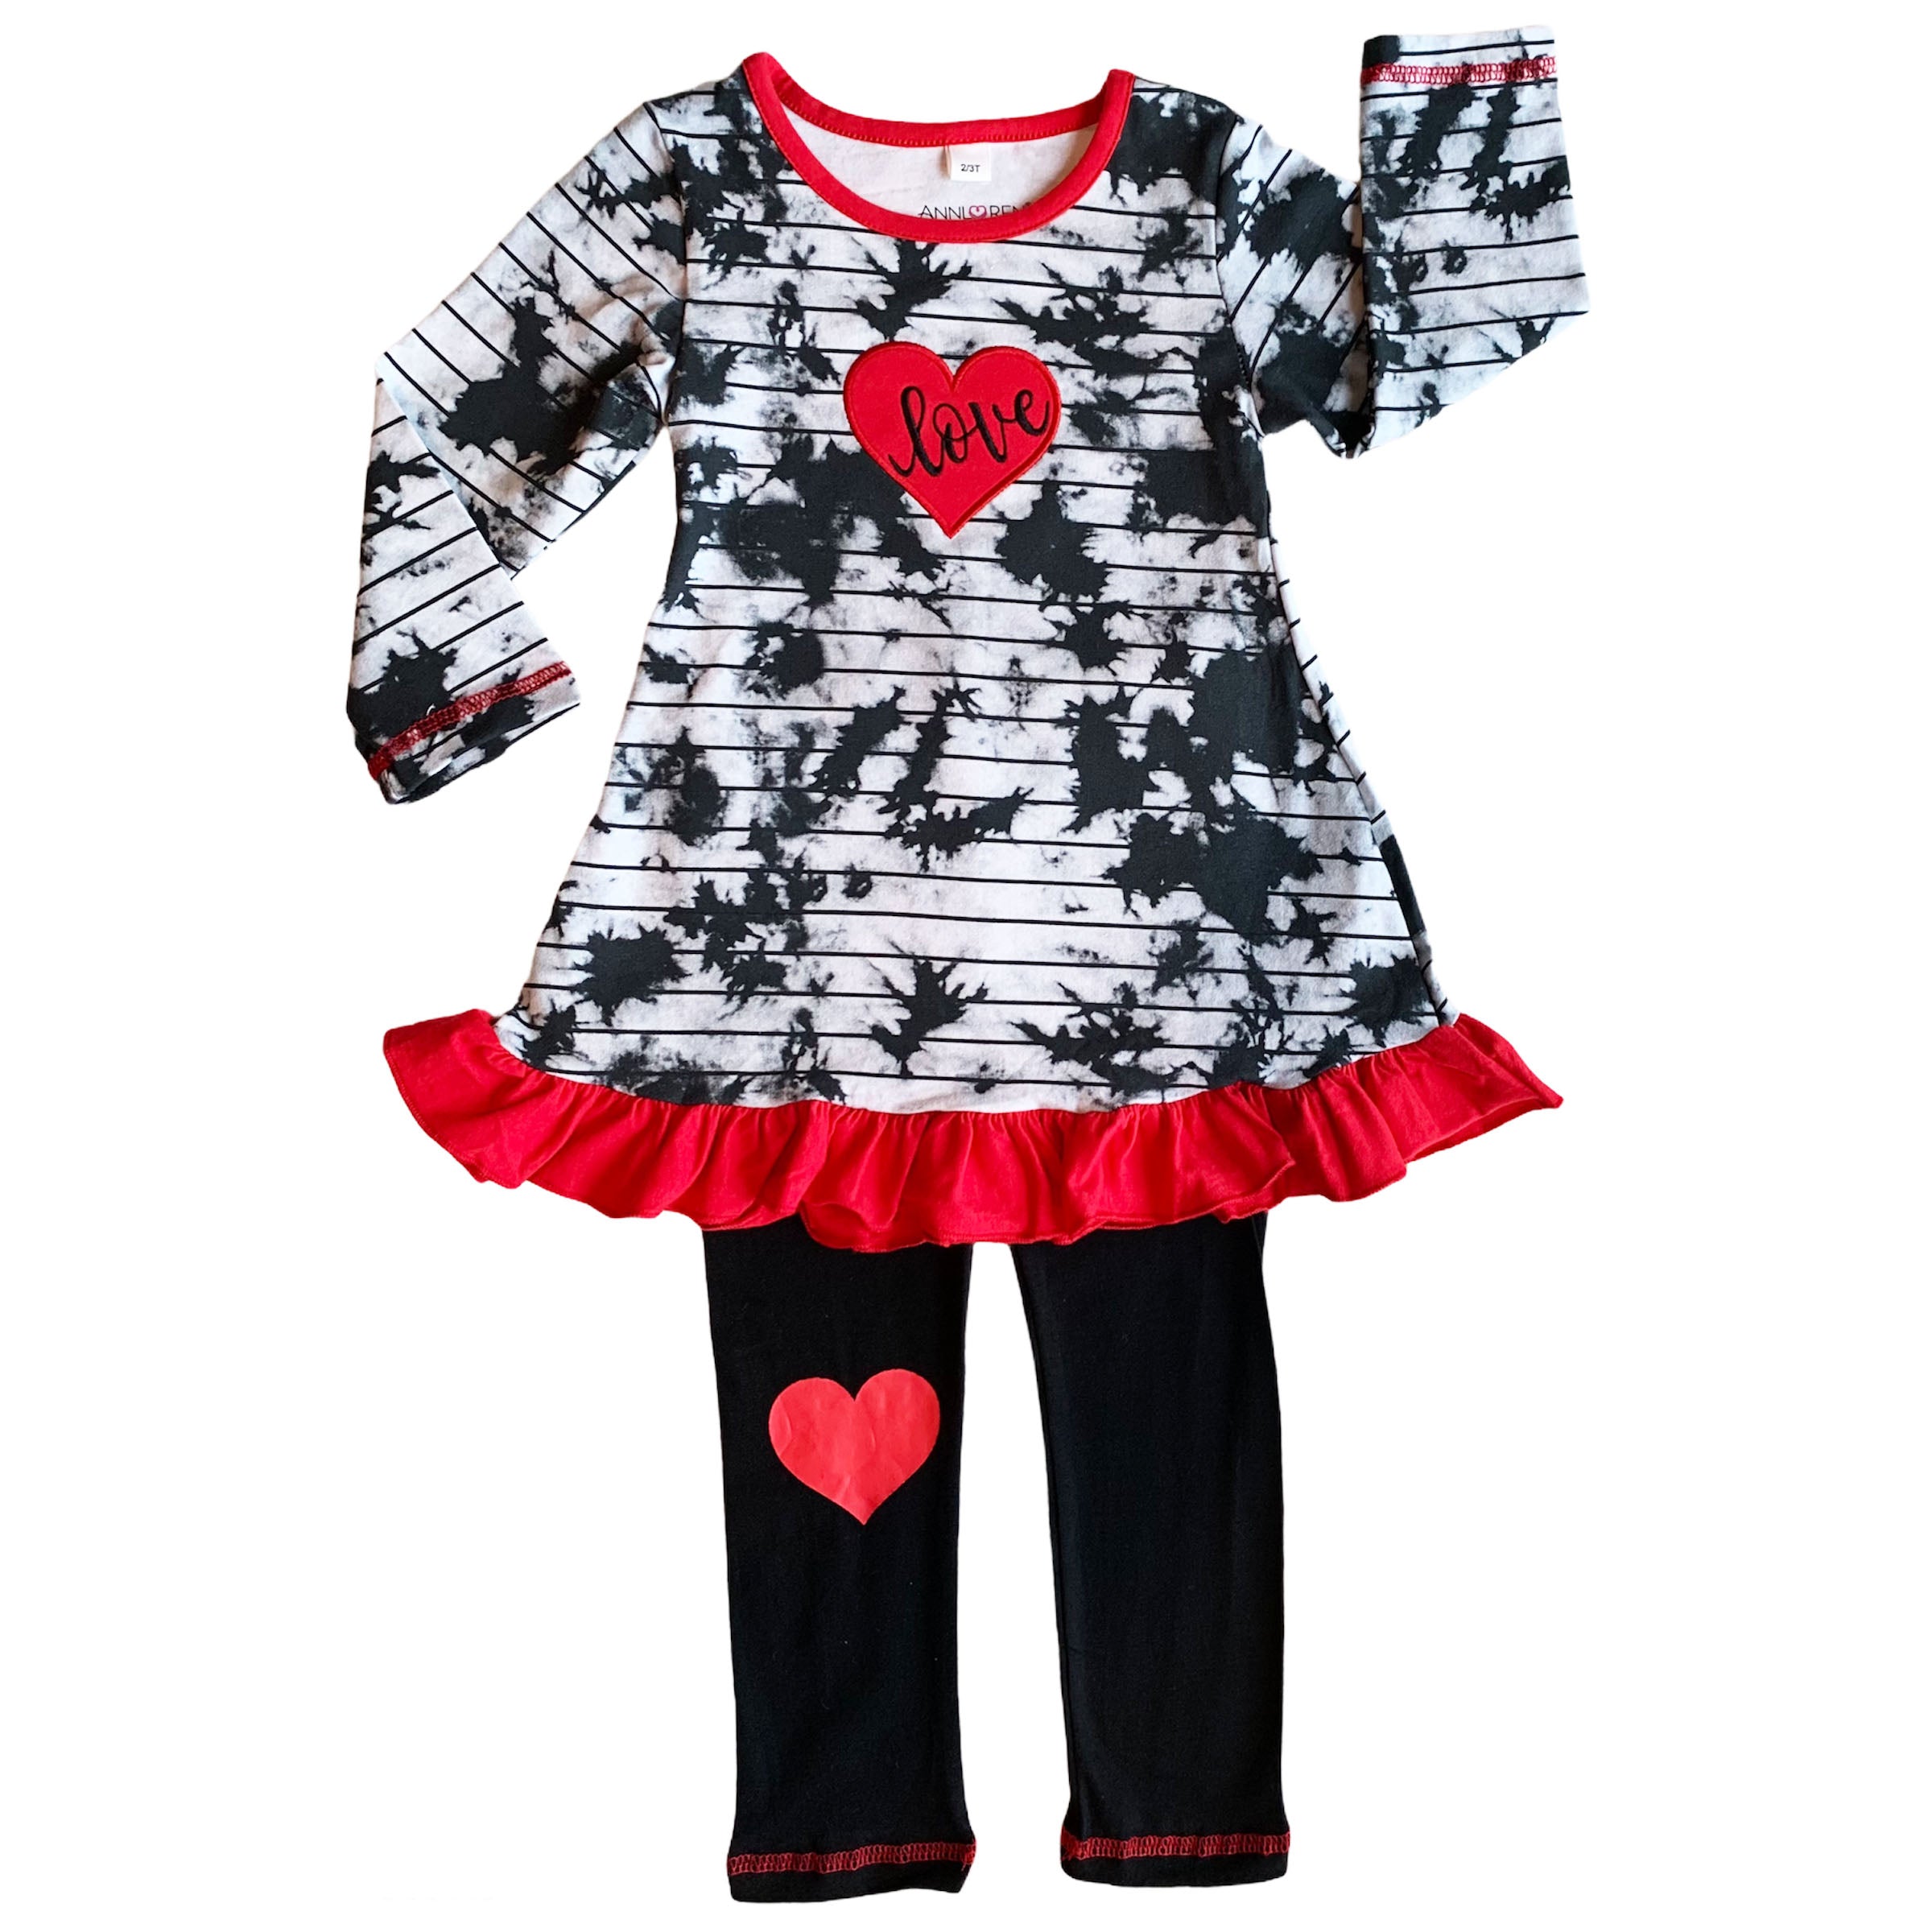 AnnLoren Girls Valentine's Day Heart Tie Dye Outfit Dress and Black Leggings-8